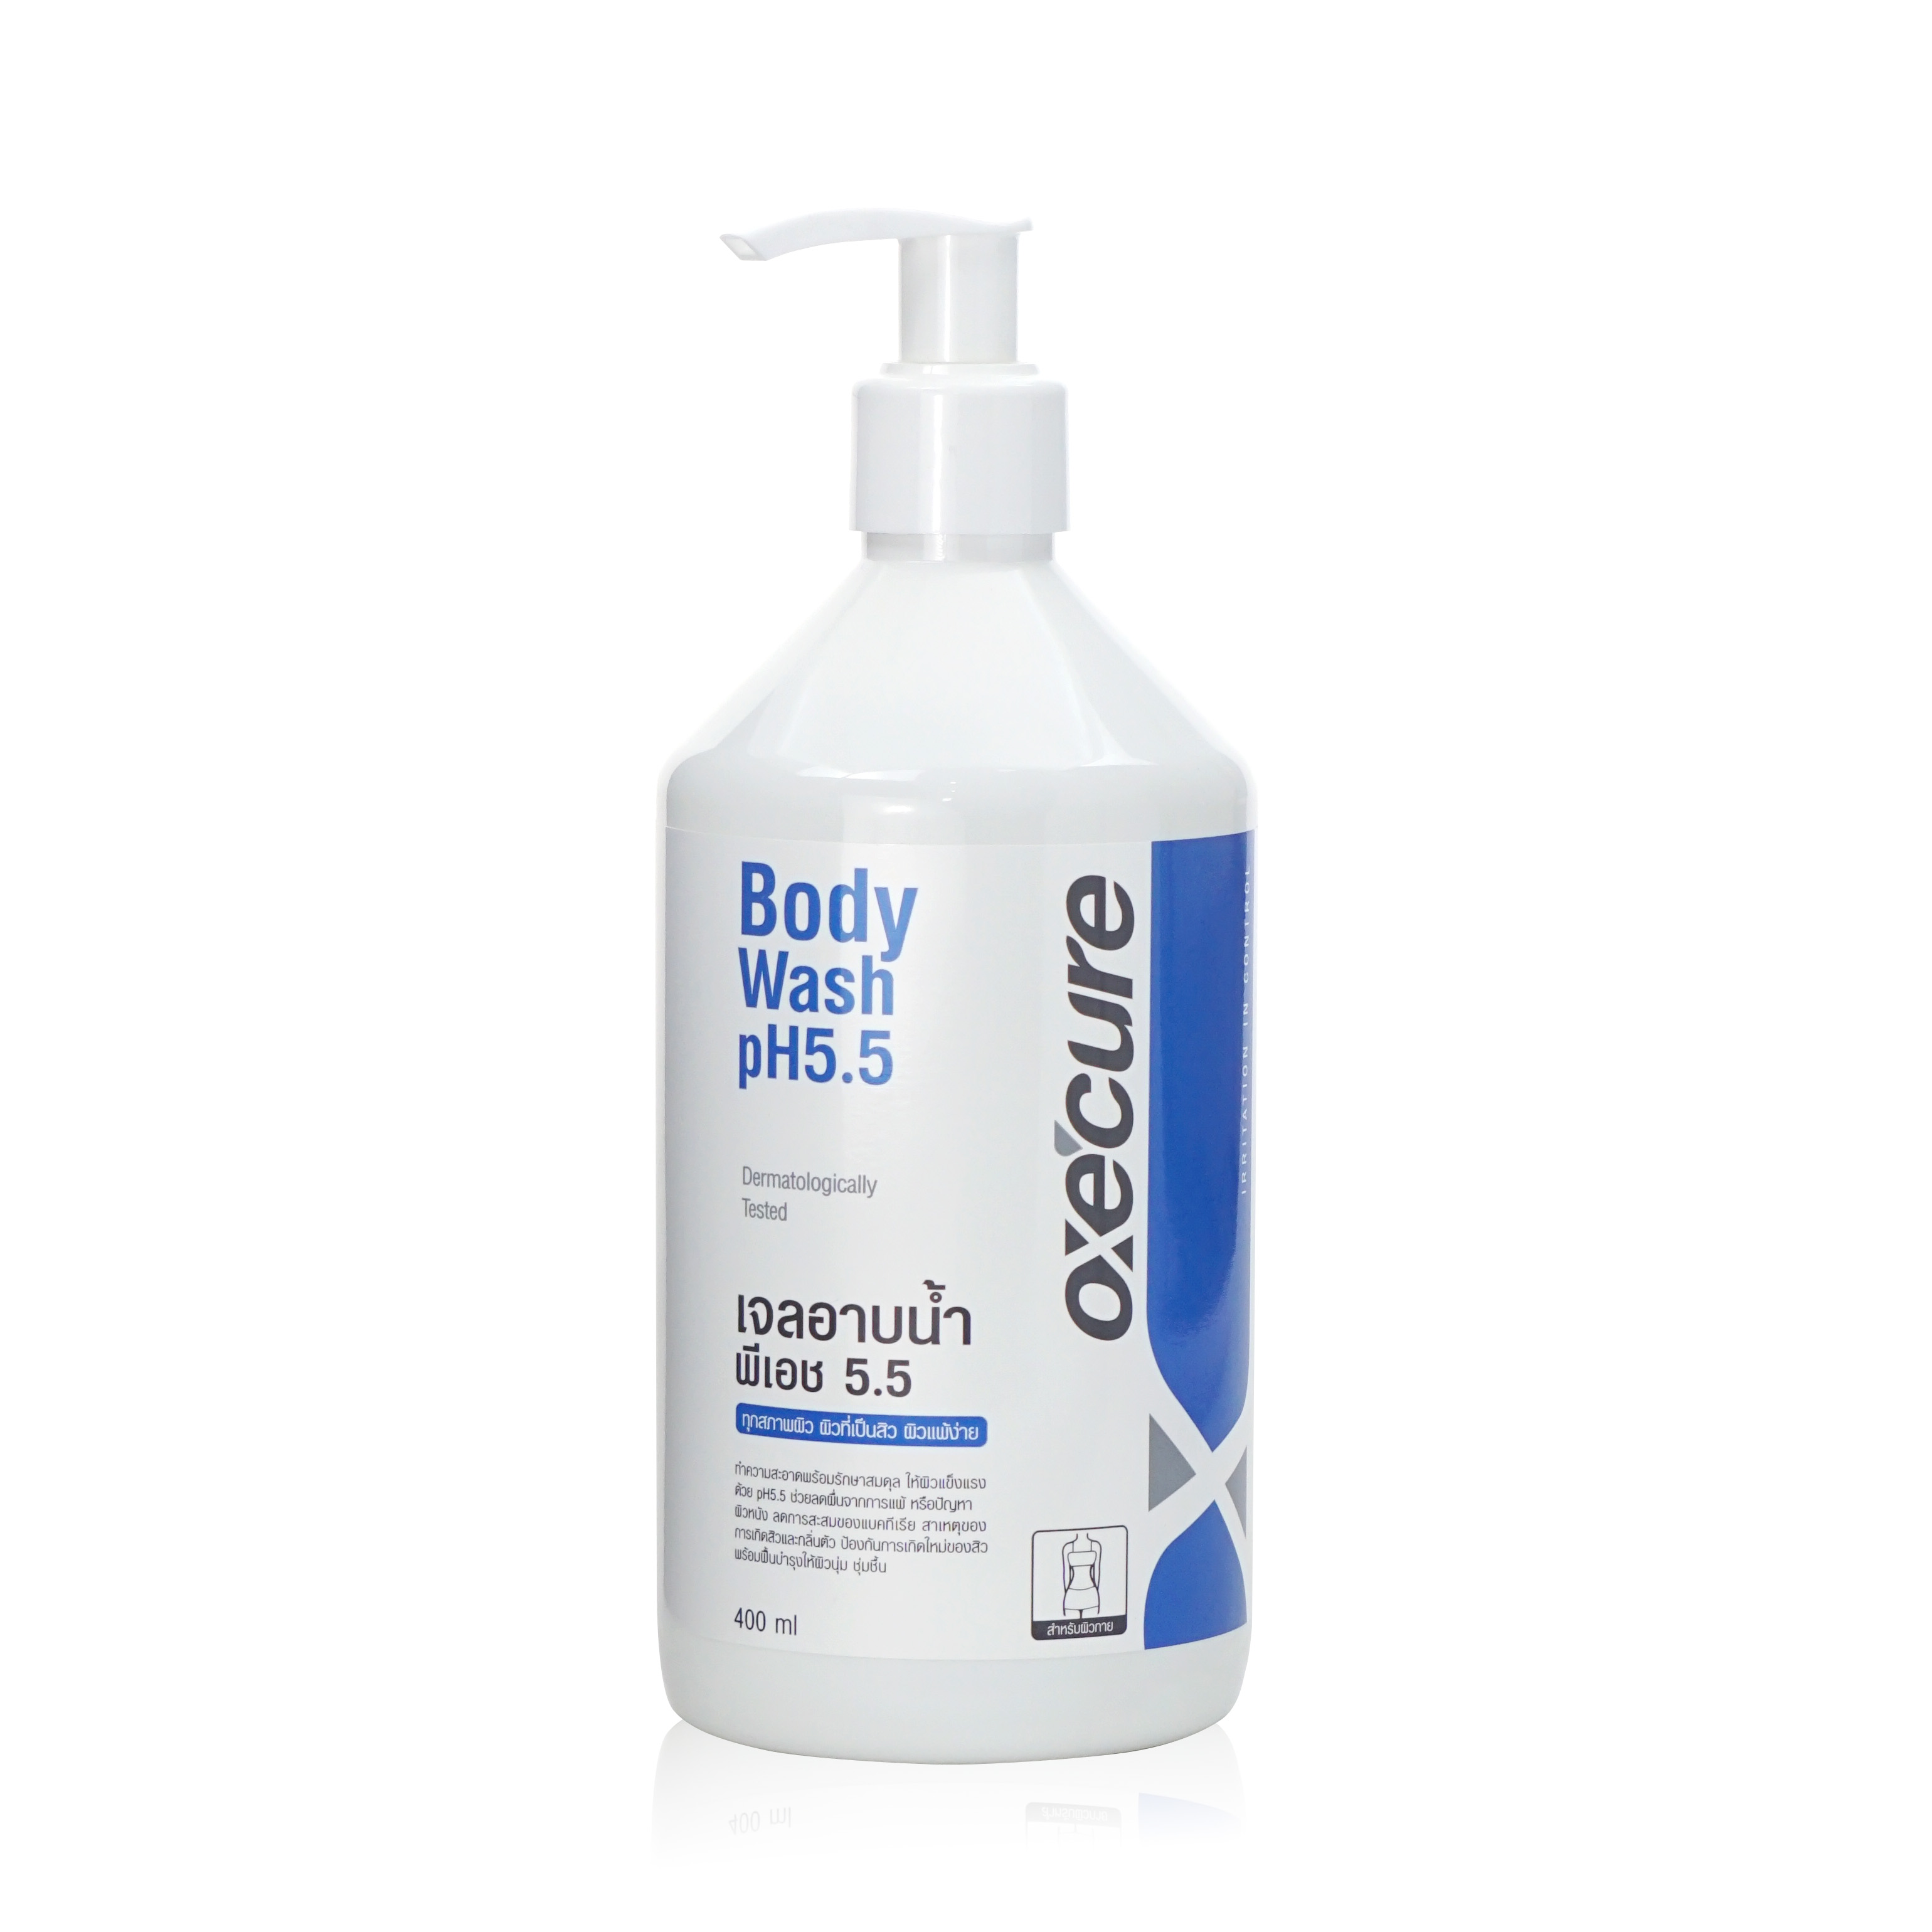 Oxe Cure Body Wash pH5.5 อ๊อกซีเคียว บอดี้ วอช ทำความสะอาดผิวโดยยังรักษาสภาวะสมดุลตามธรรมชาติ (400 ml) [1 ขวด]